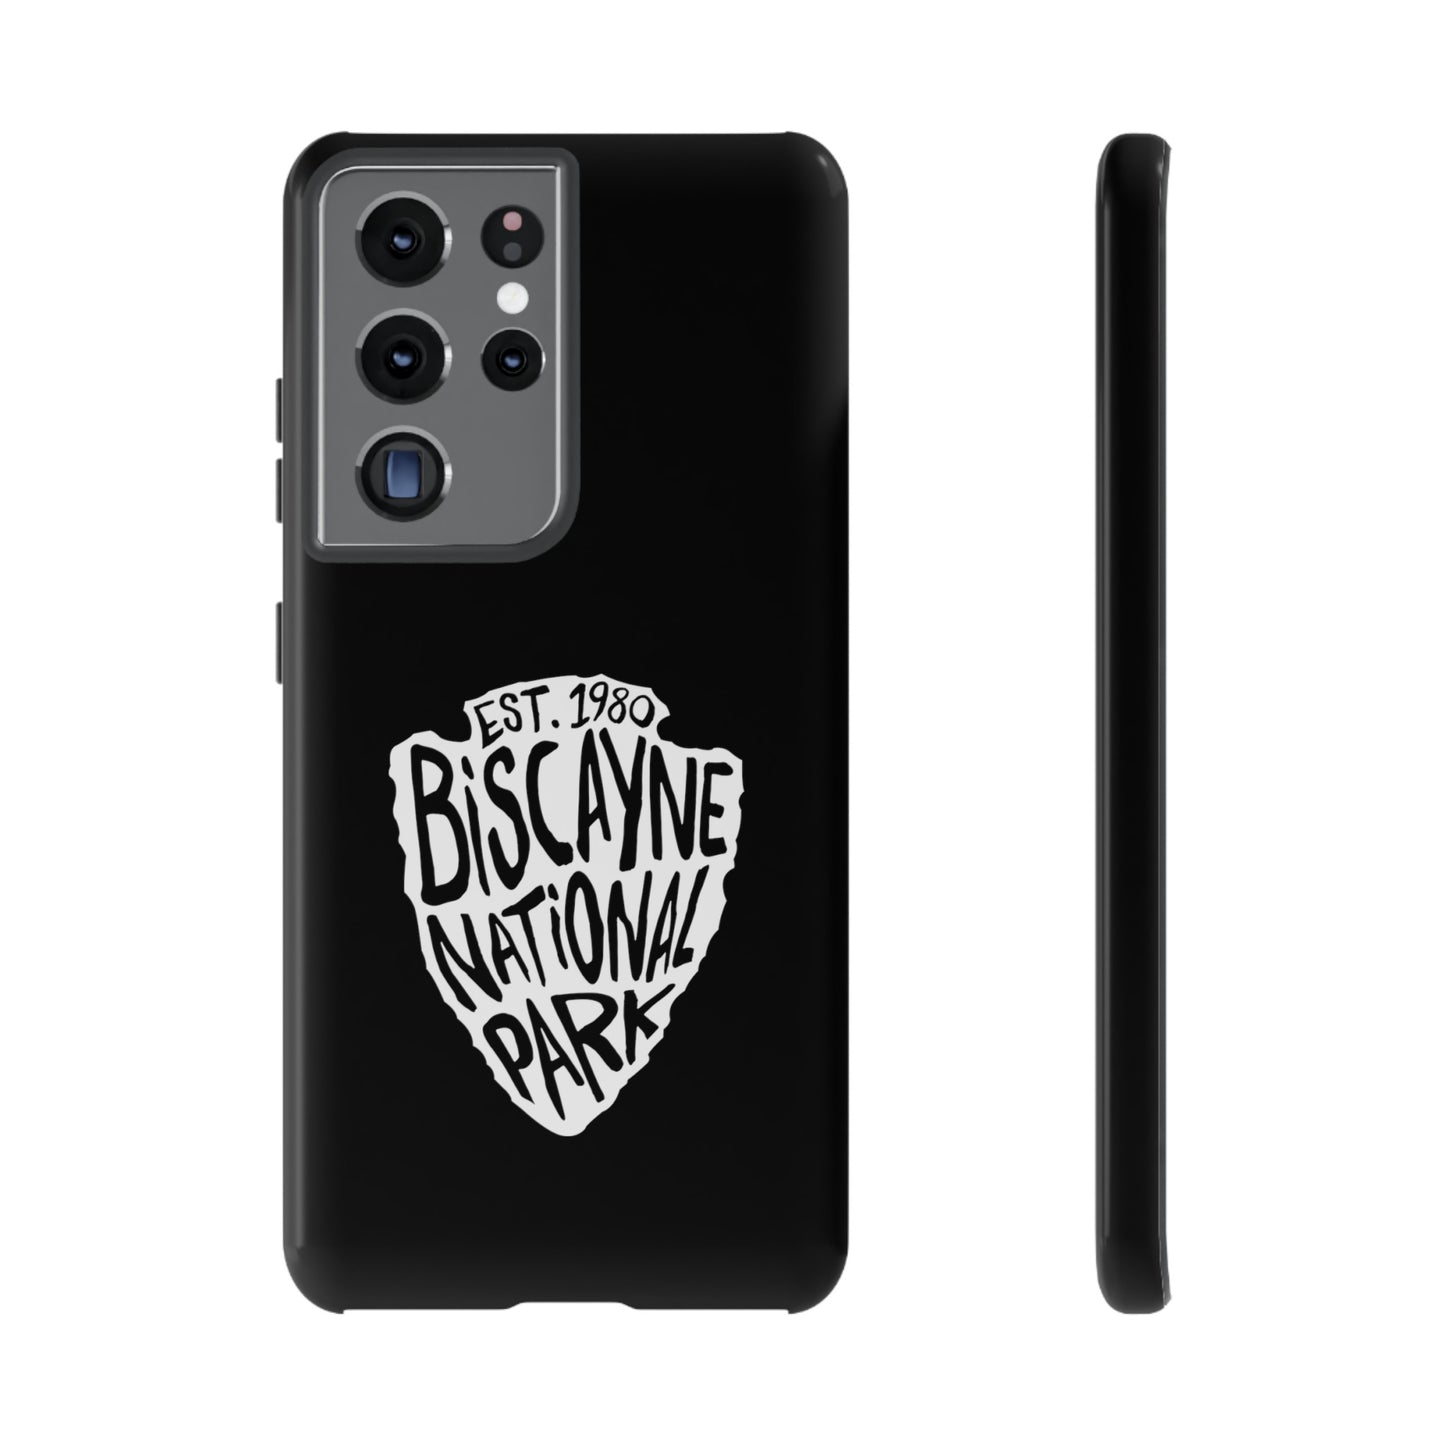 Biscayne National Park Phone Case - Arrowhead Design